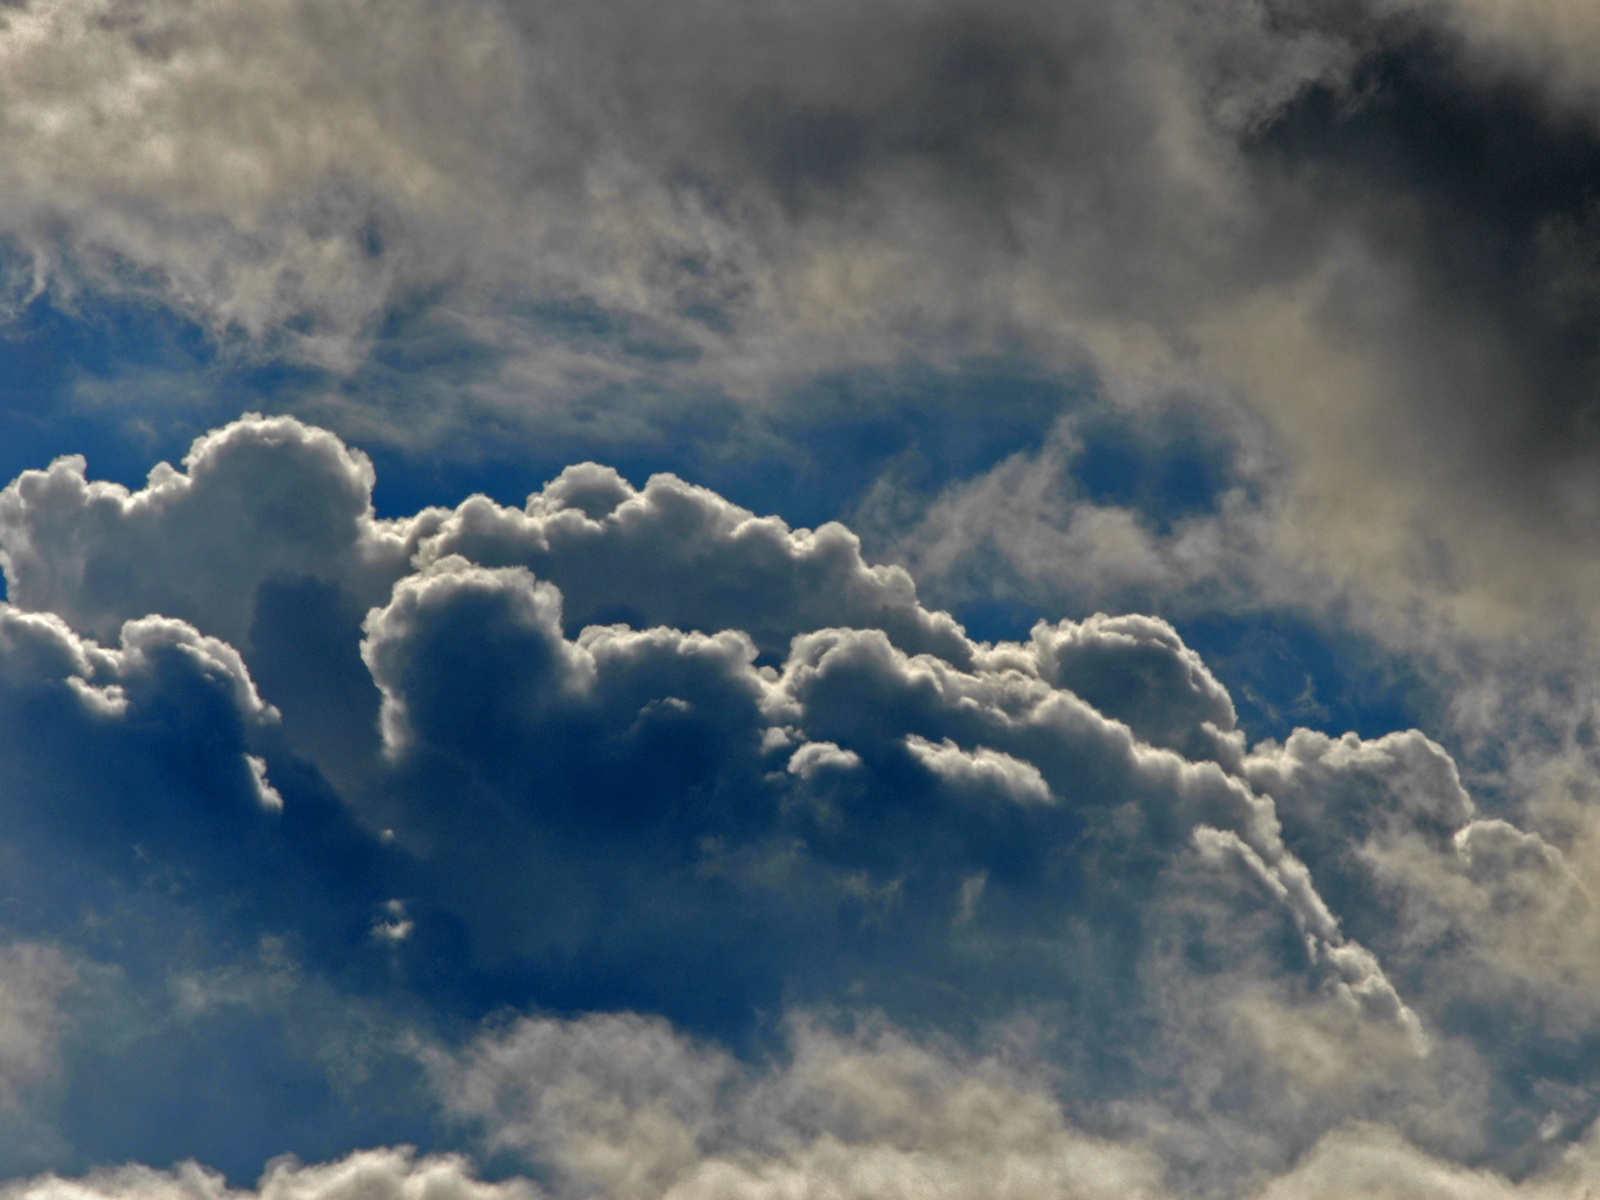 Rain cloud series (image 5 of 15) photo